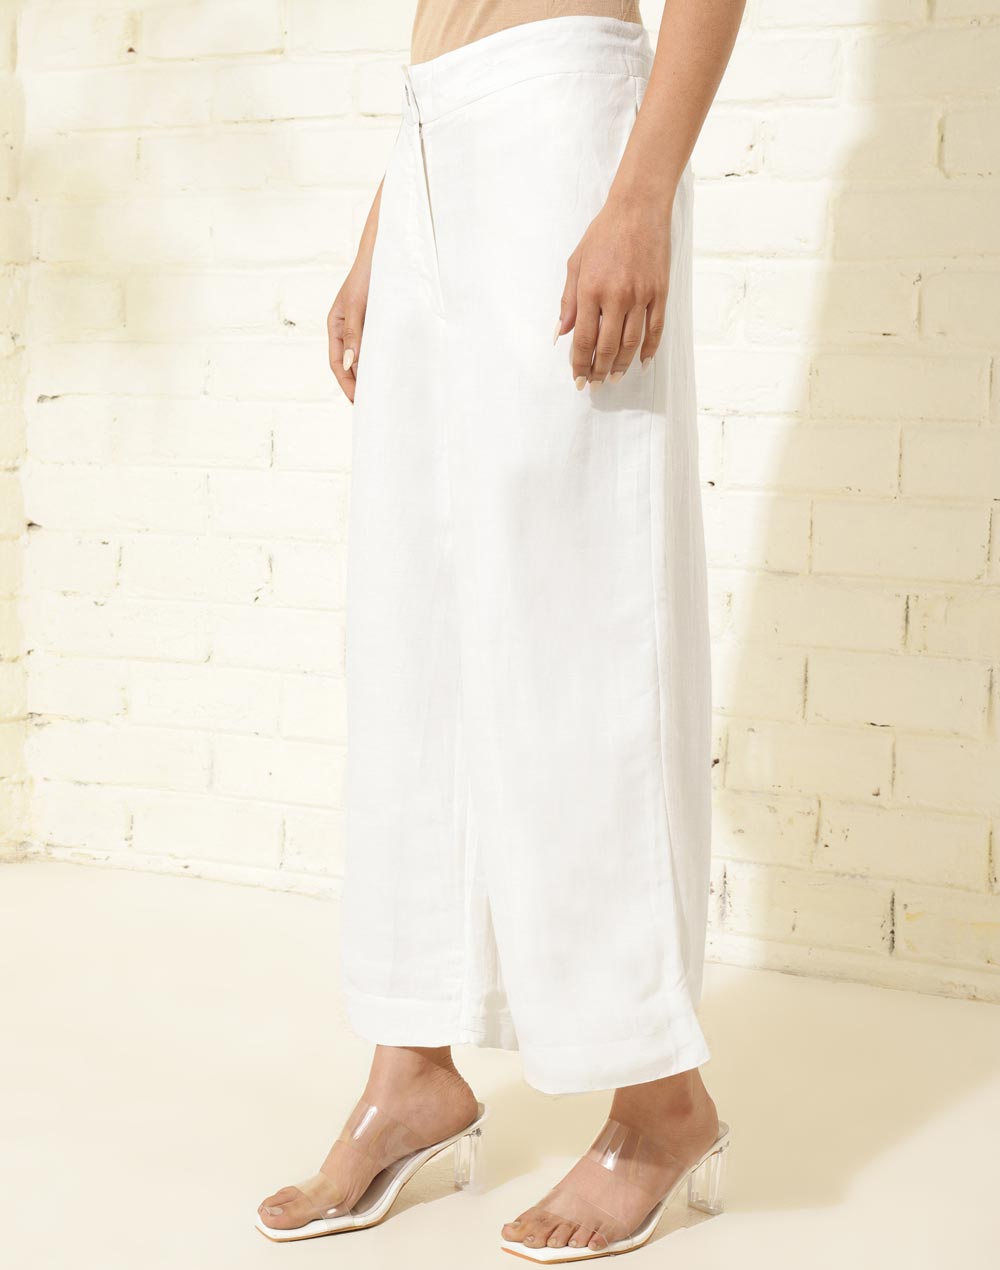 Design Details For Bottoms - Threads - WeRIndia  Women trousers design,  Womens pants design, Pants women fashion